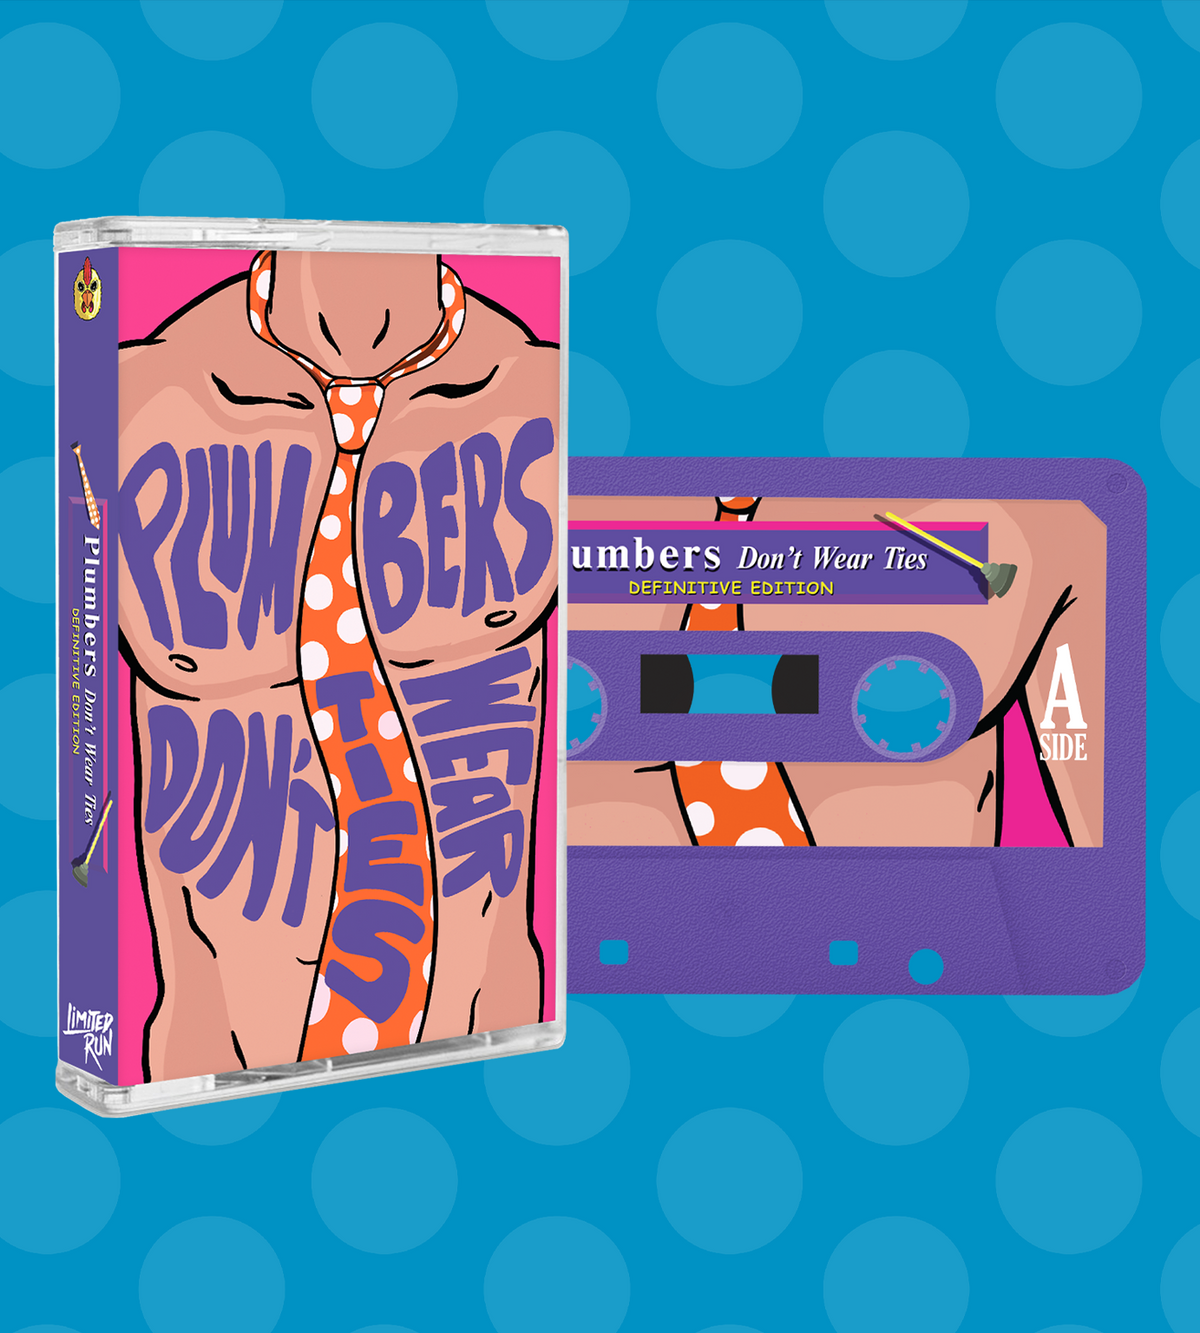 Plumbers Don’t Wear Ties: Definitive Edition - Cassette Tape